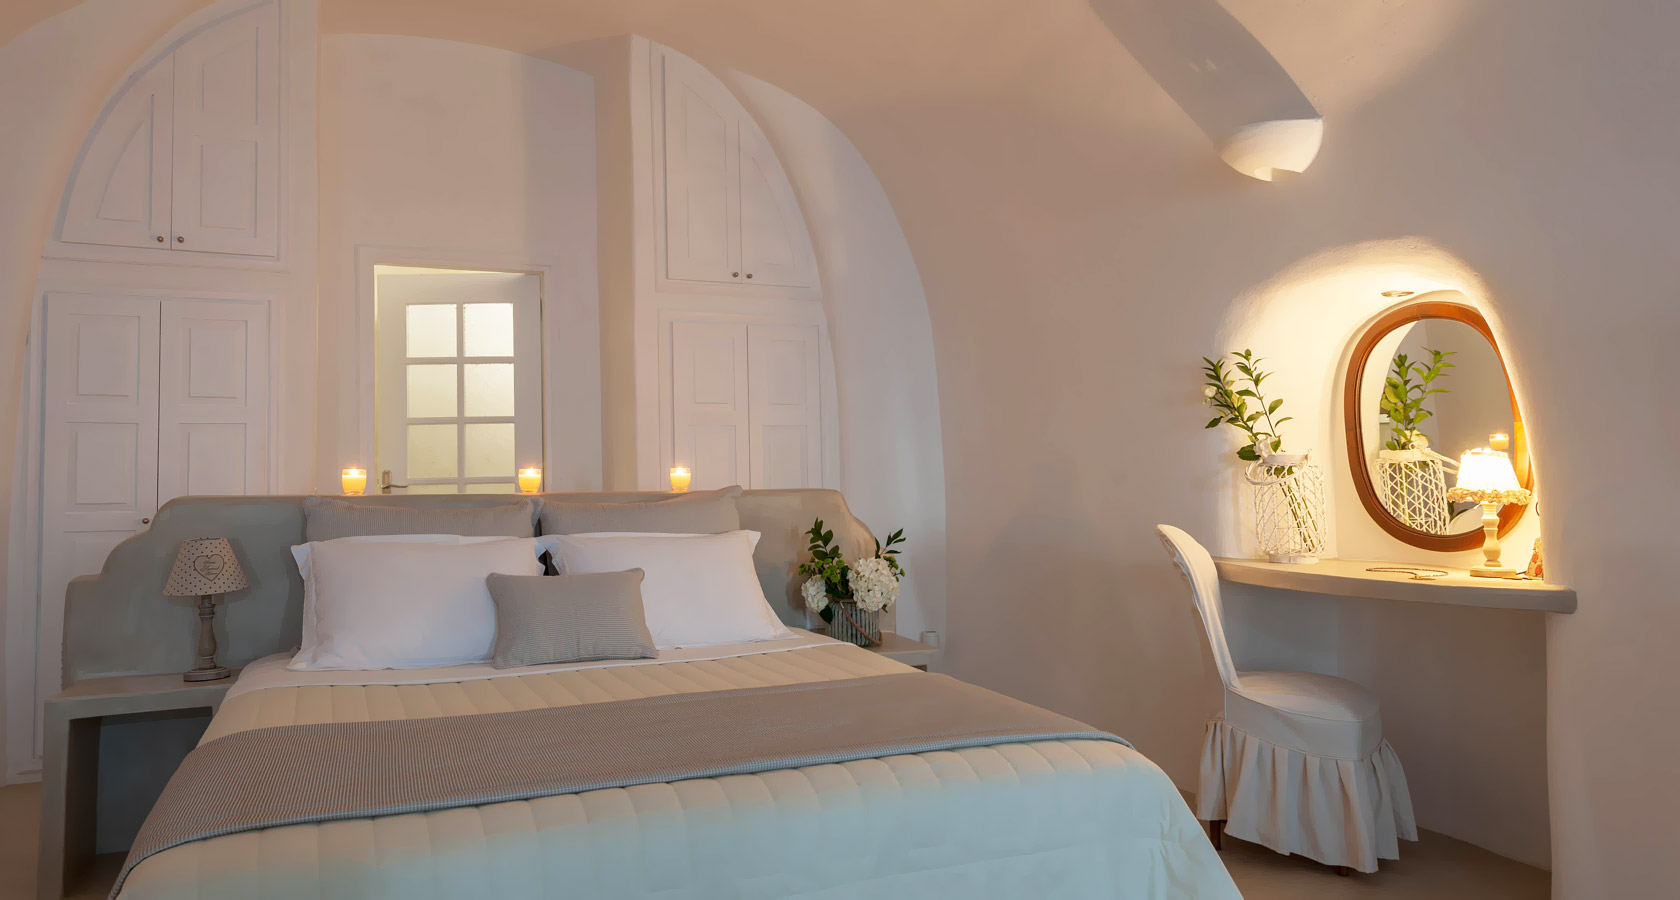 Thirea luxury suites in Oia Santorini – The bedroom